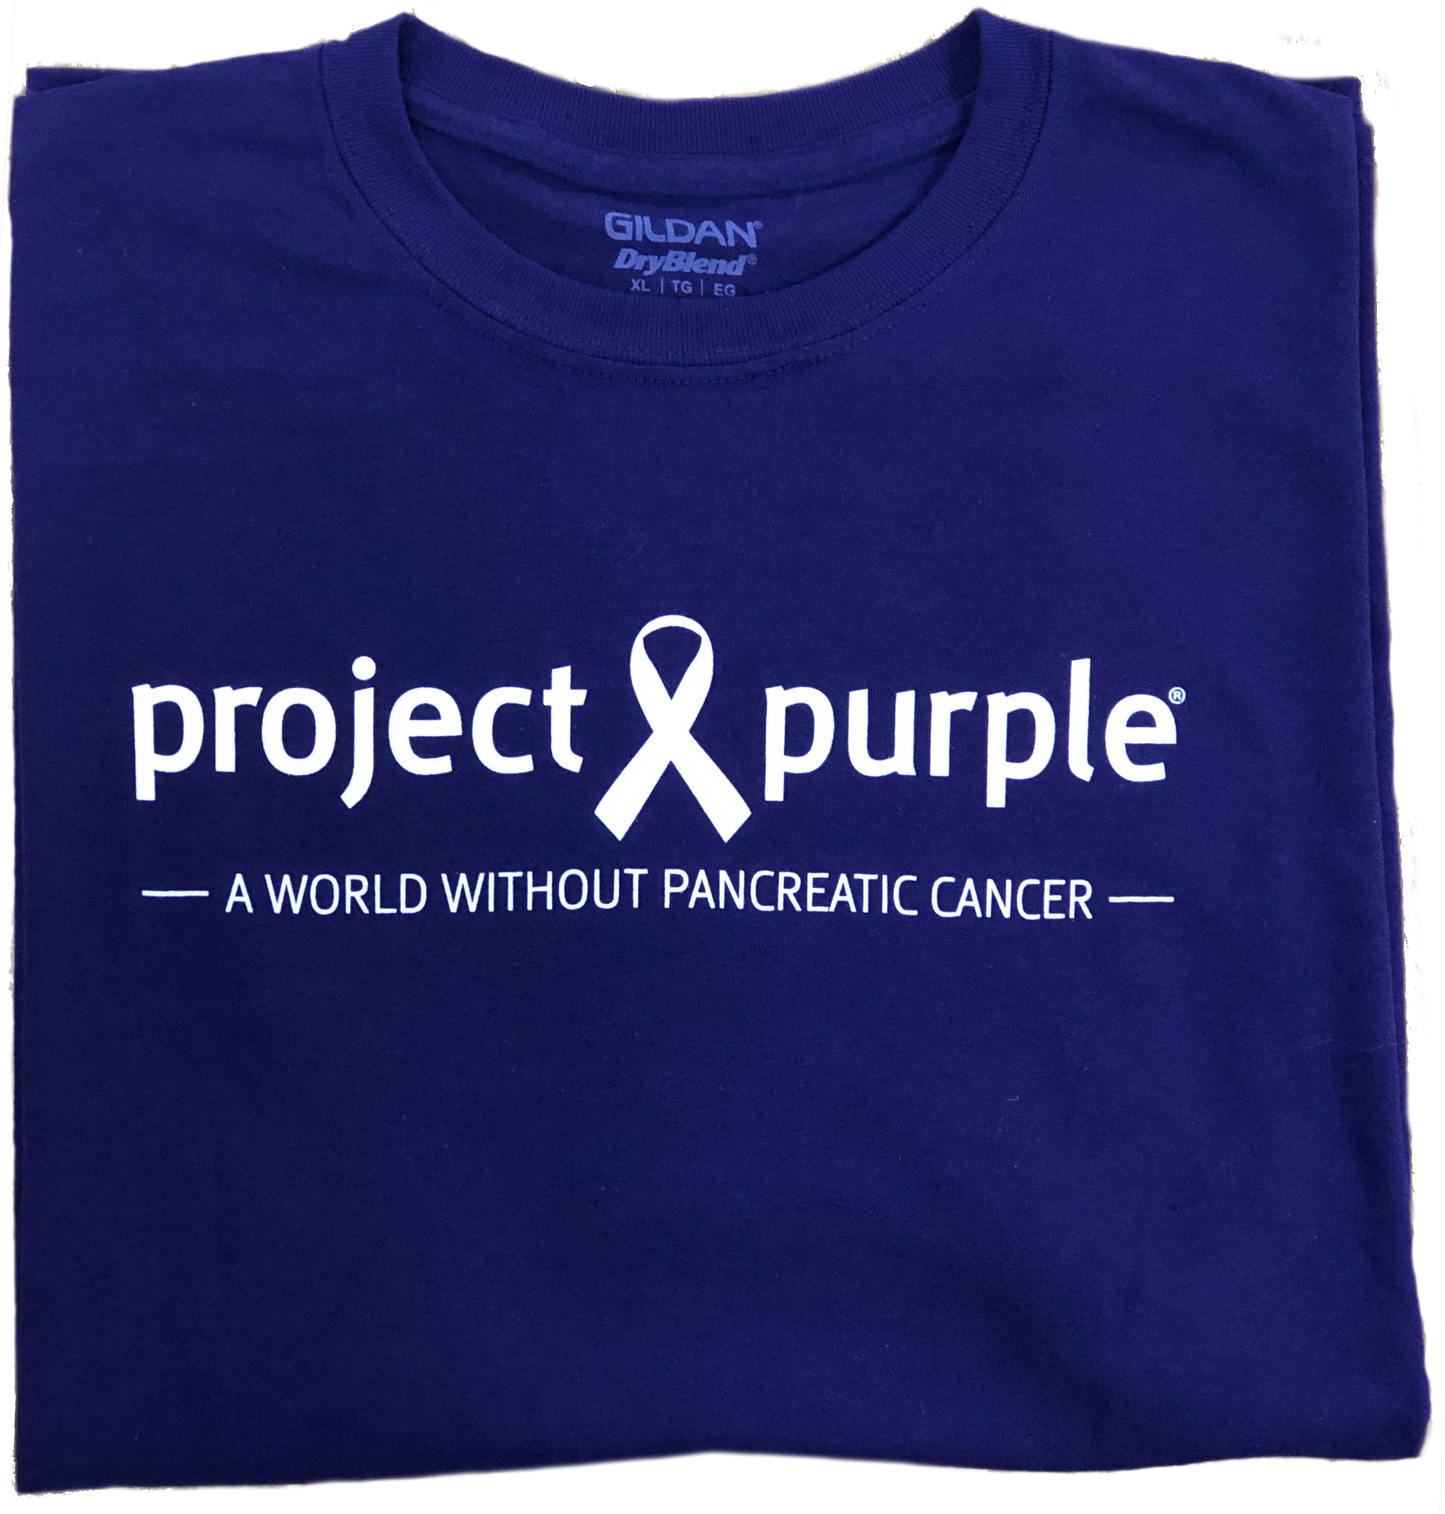 Purple shirt with white project purple logo